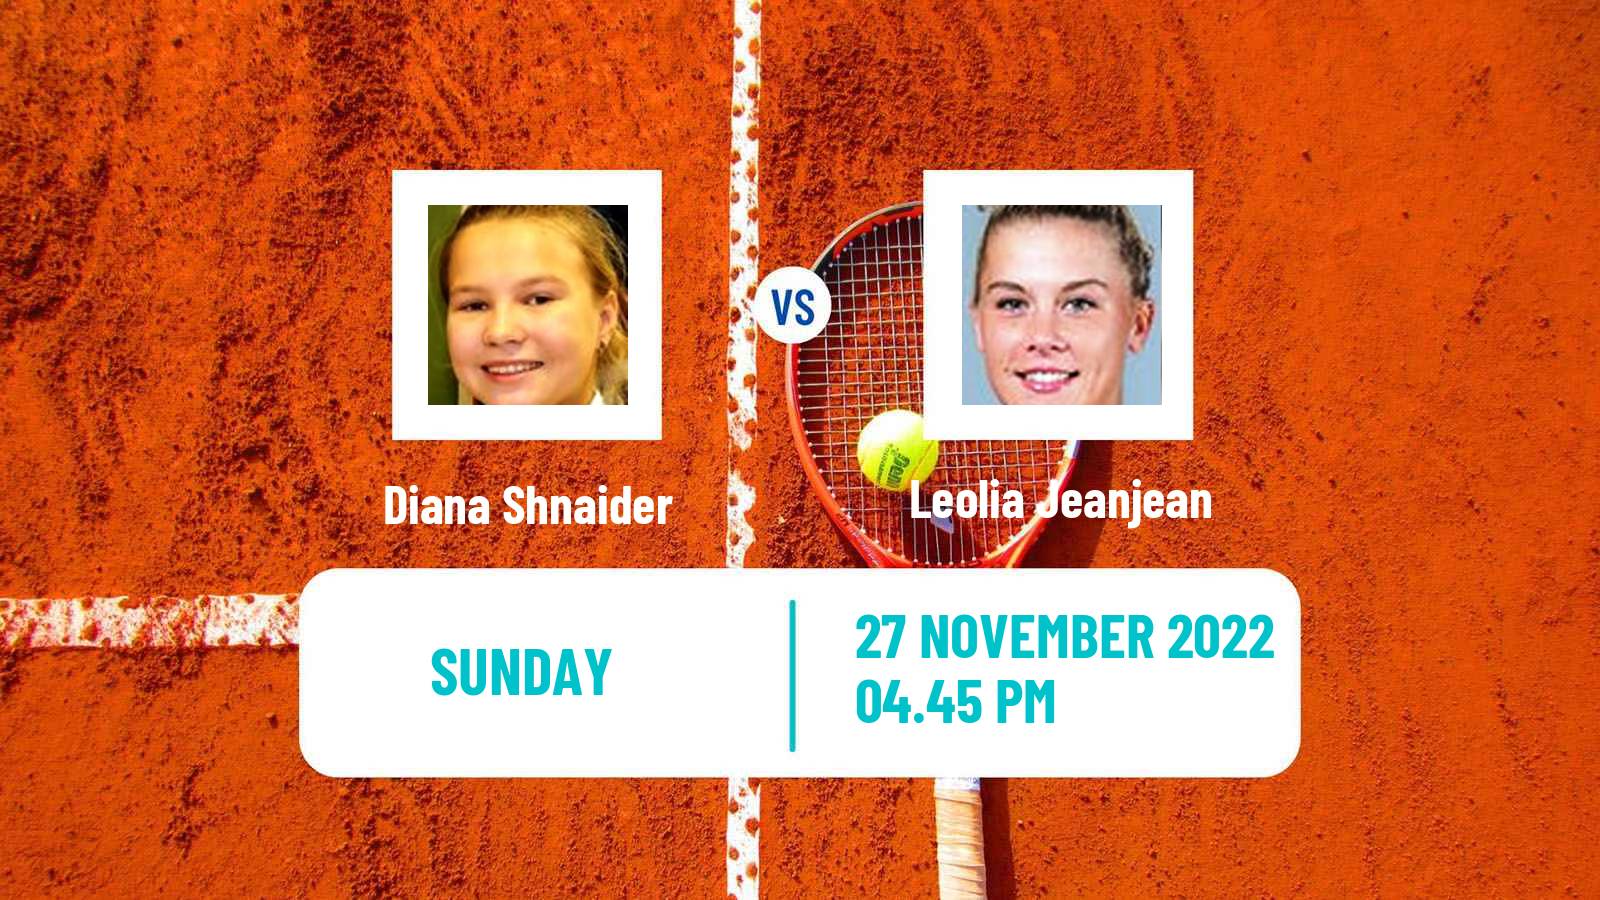 Tennis ATP Challenger Diana Shnaider - Leolia Jeanjean